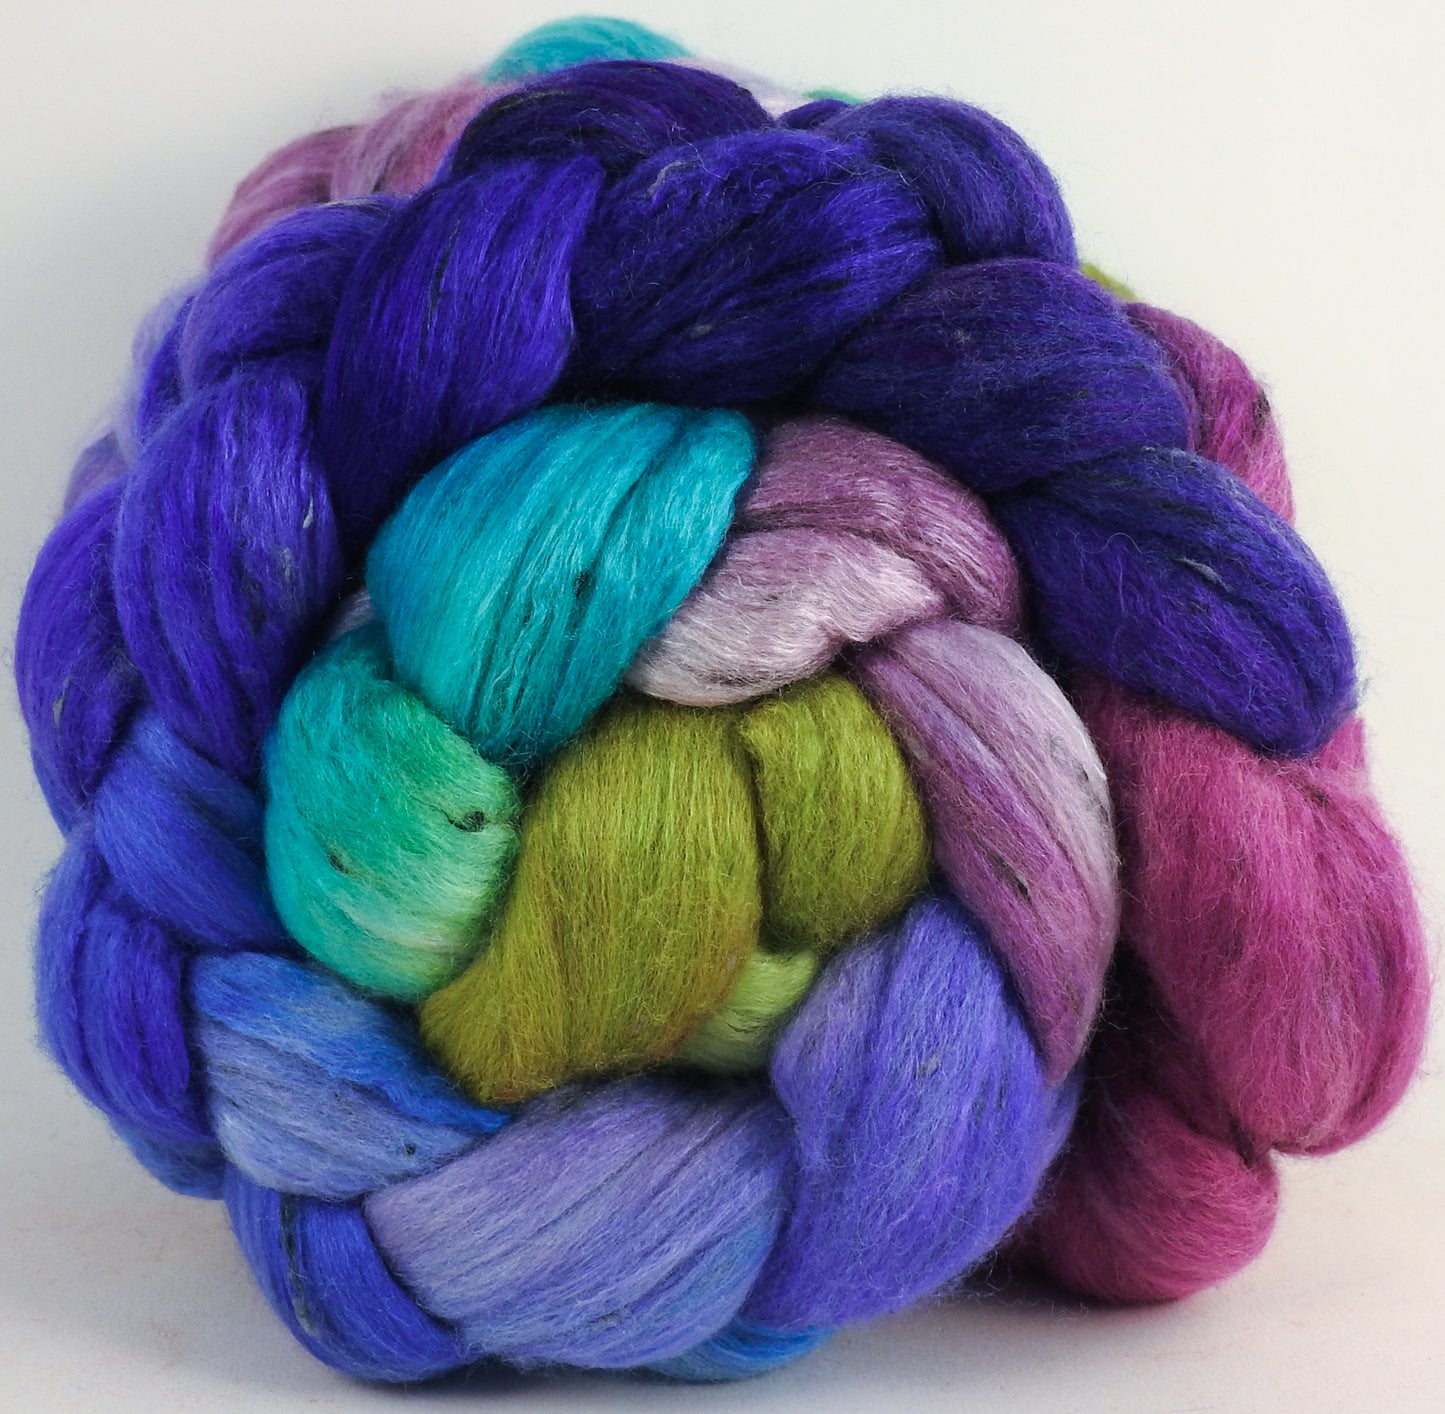 Batt in a Braid #49 - Larkspur - Polwarth/ Mulberry Silk/ Tweed Blend (50/25/25)